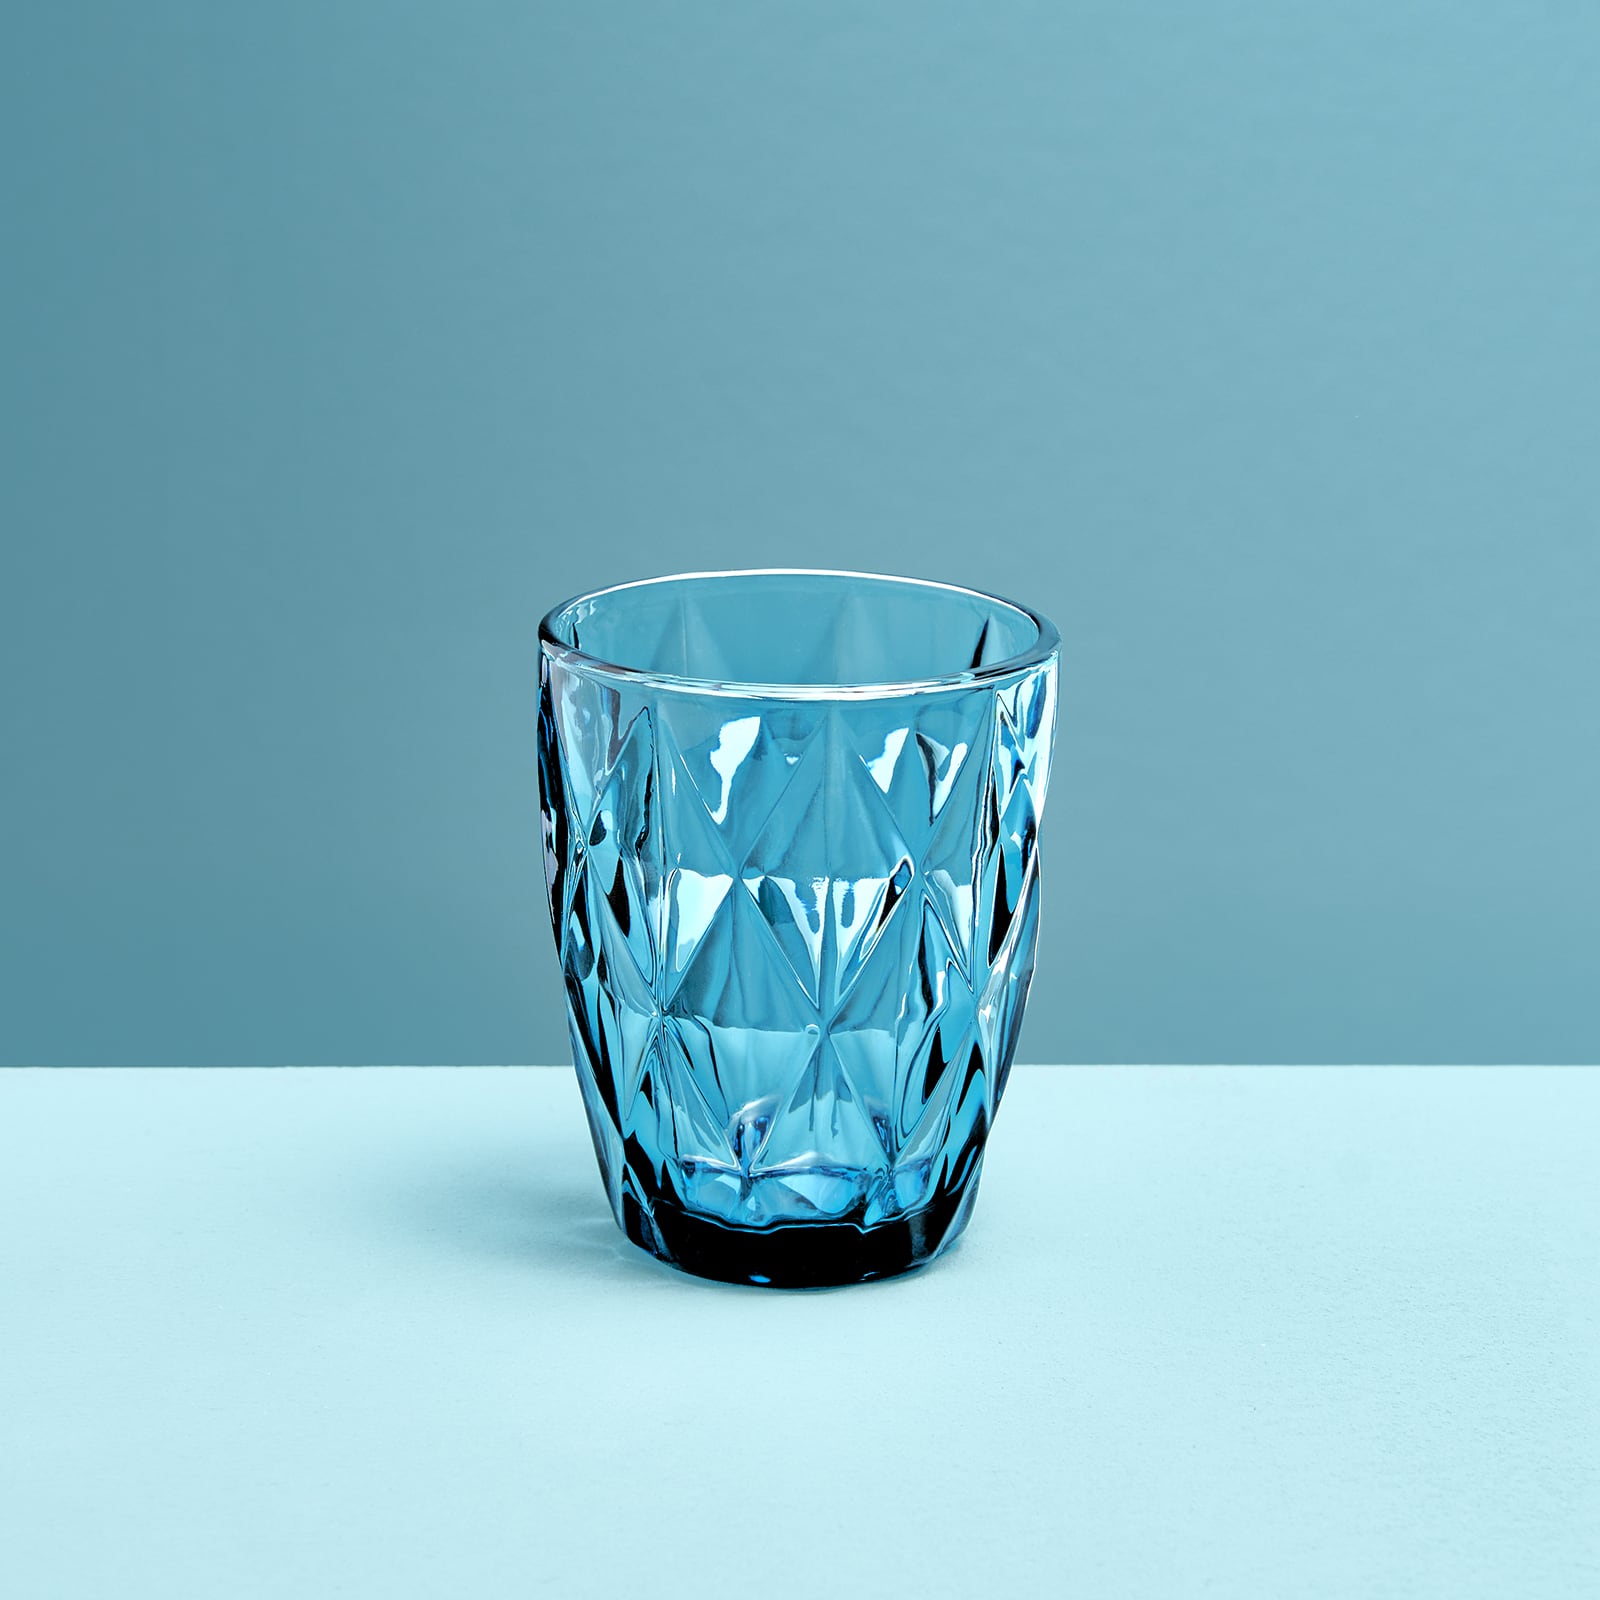 4er-Set Wasserglas, blau, Glas, 8x10 cm